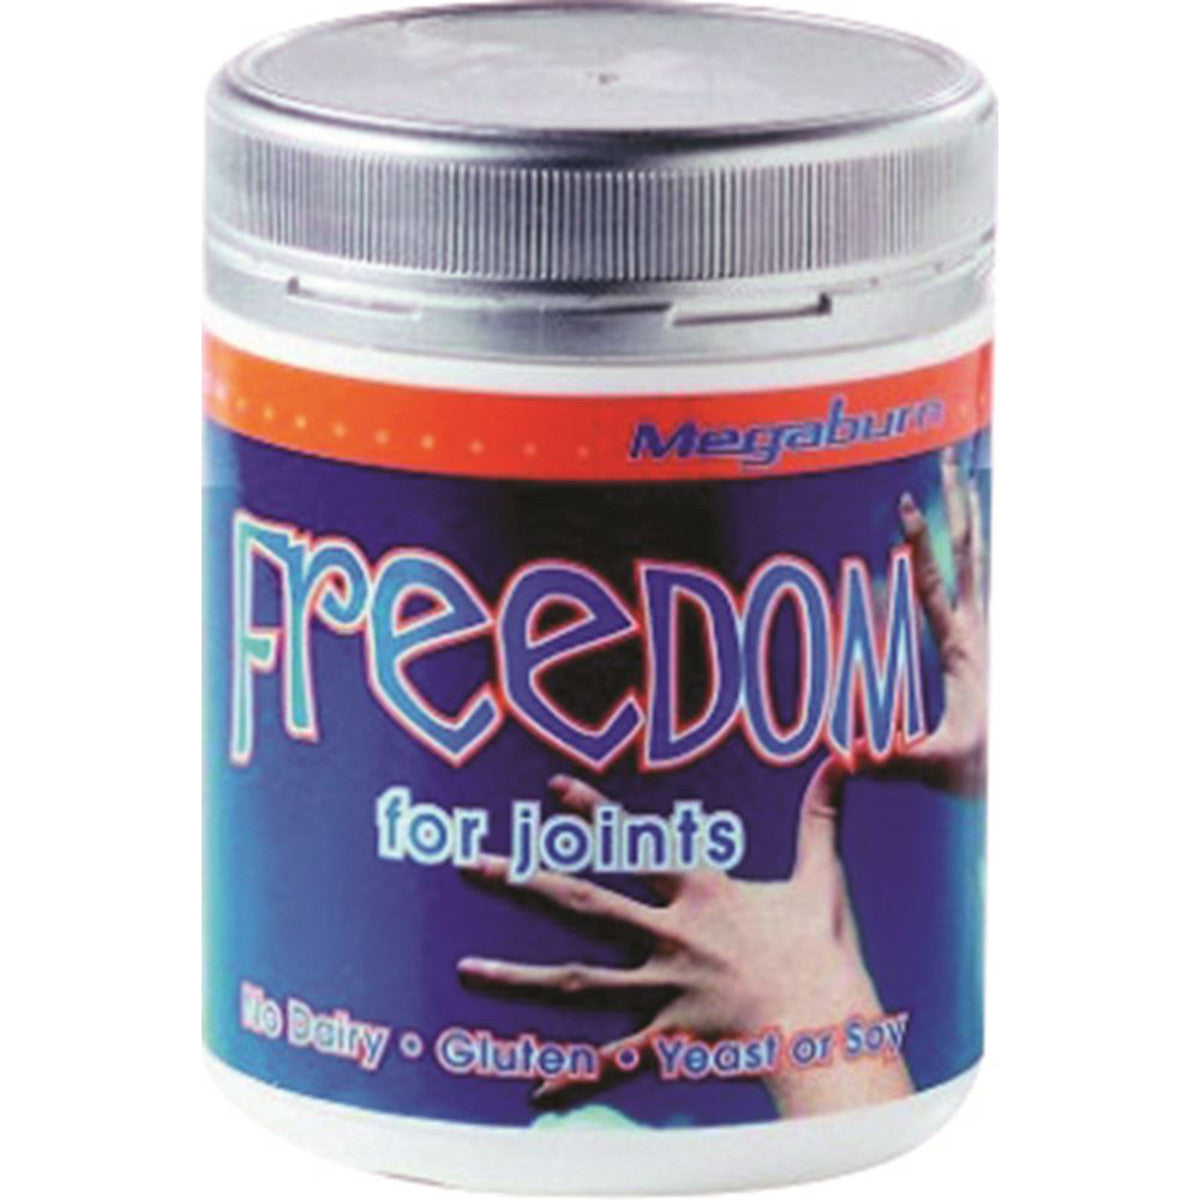 Megaburn - Freedom For Joints